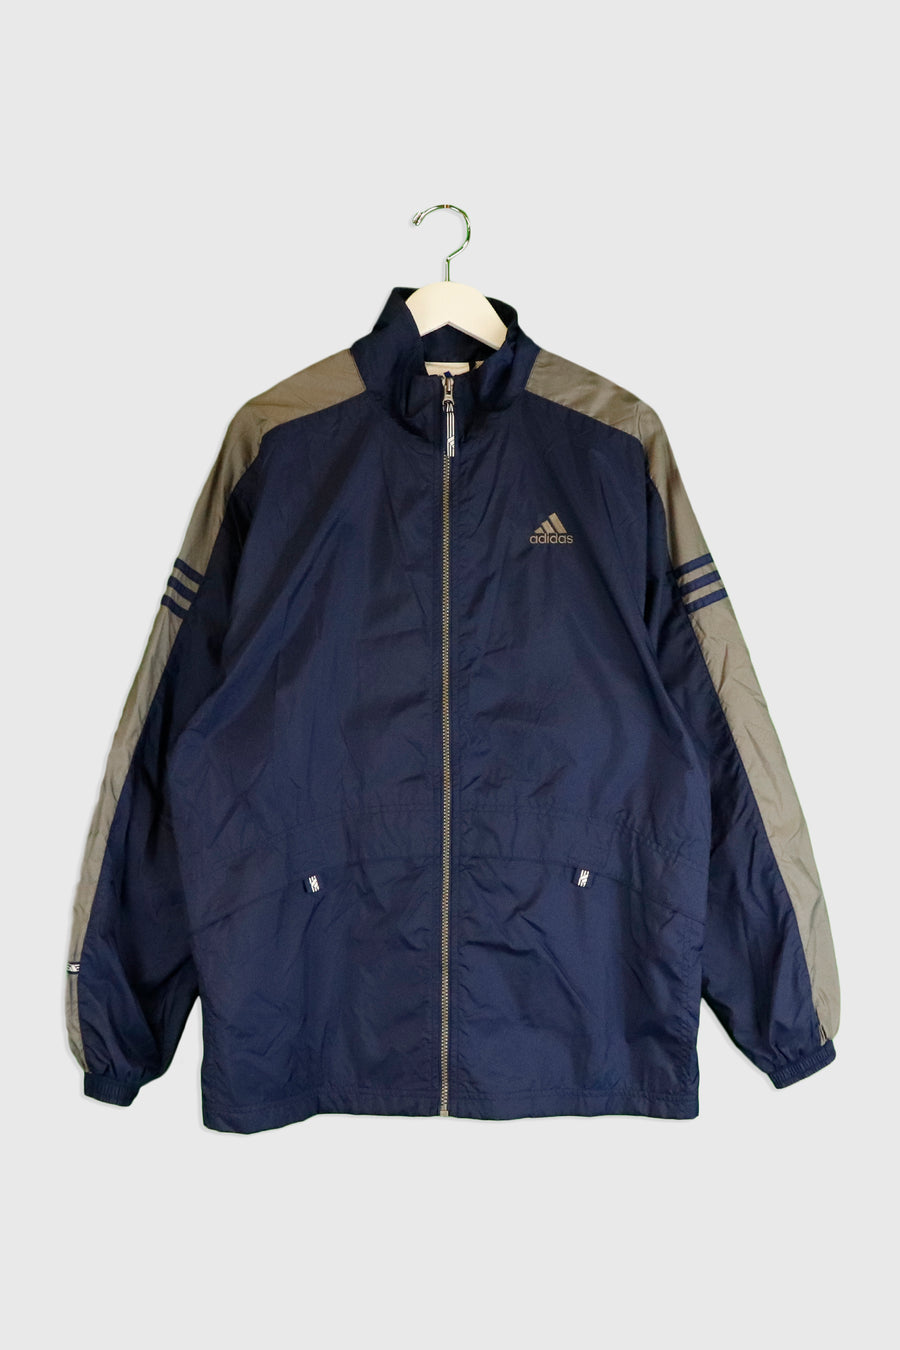 Vintage Adidas Full Zip Striped Two Toned Rain jacket Sz S